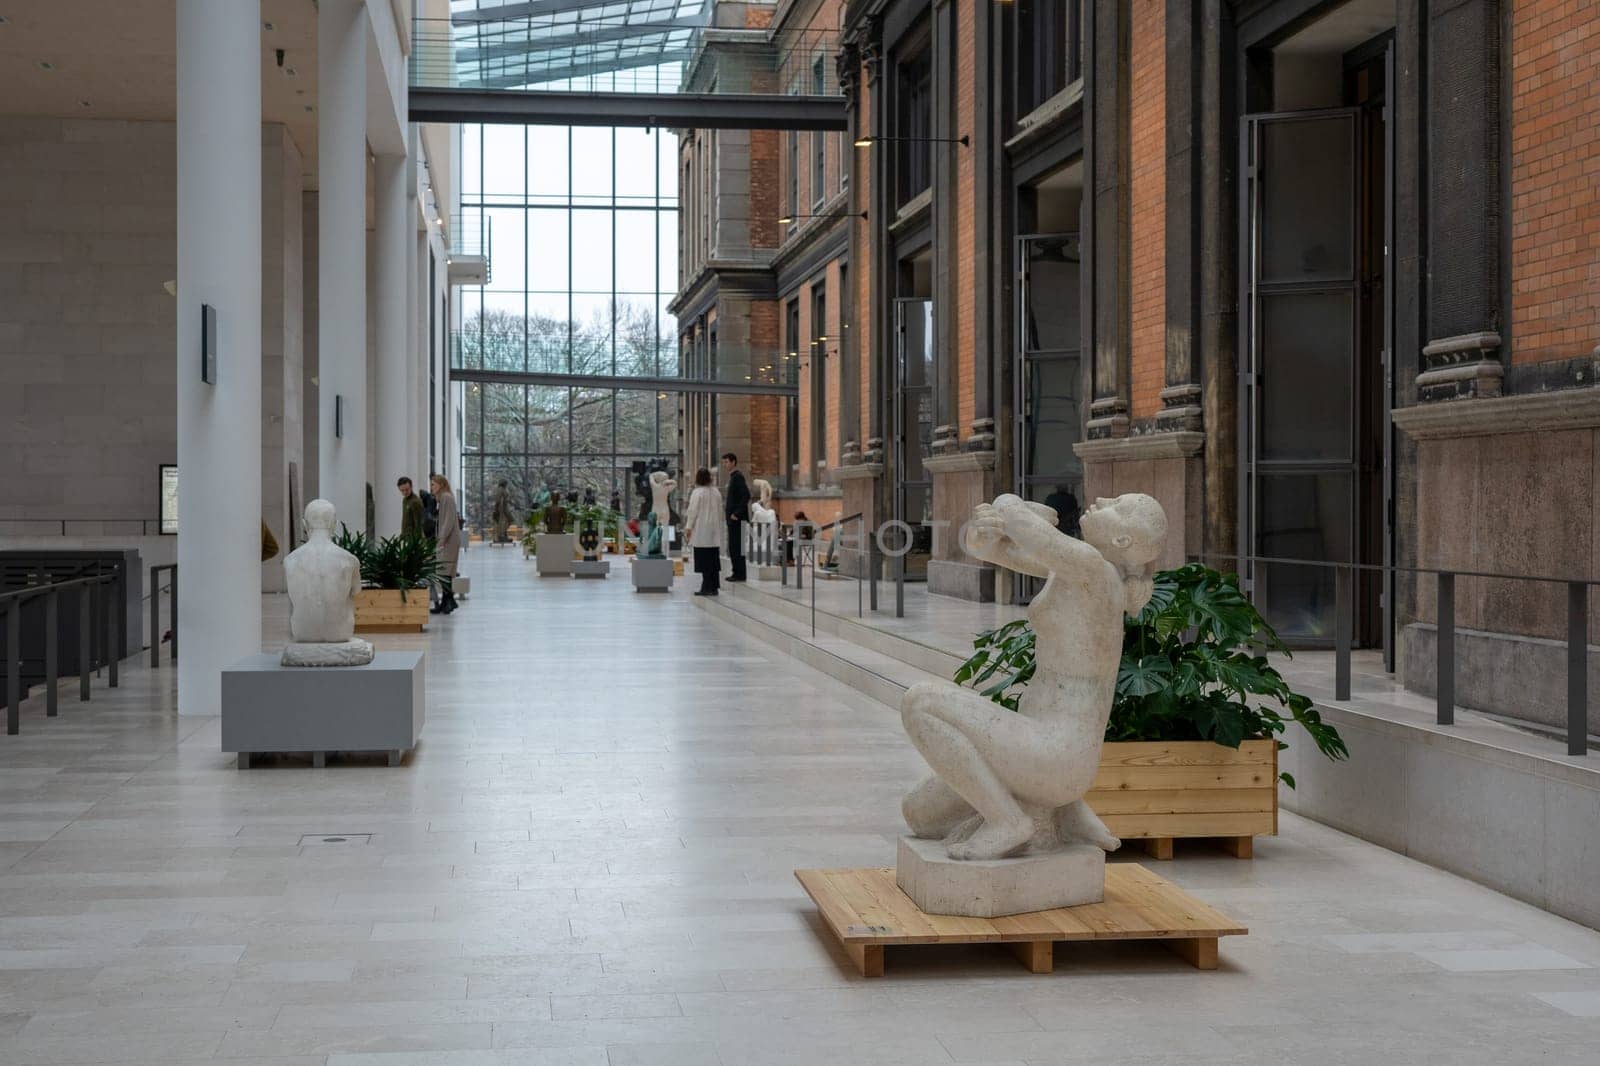 Copenhagen, Denmark - January 20, 2024: Sculptures and people inside the National Gallery of Denmark